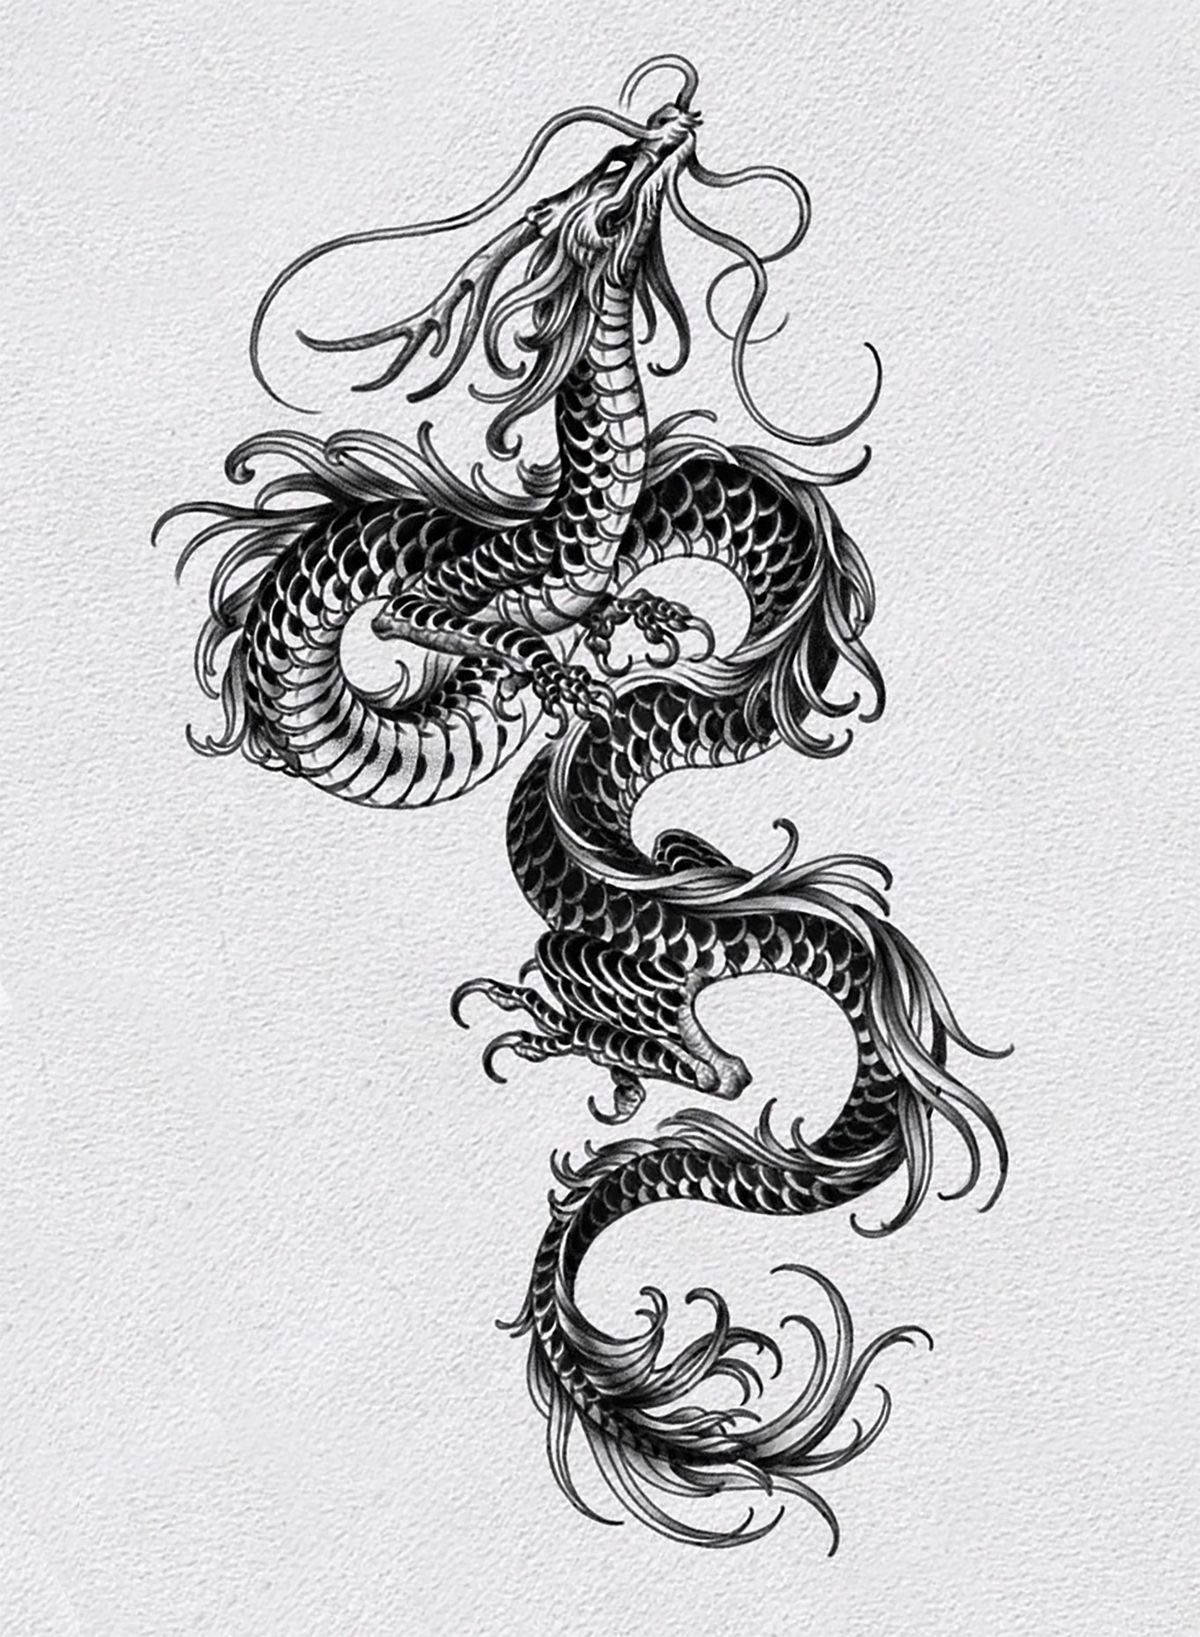 Caption: Unleashing Fury, The Elegance Of A Japanese Dragon Tattoo Background